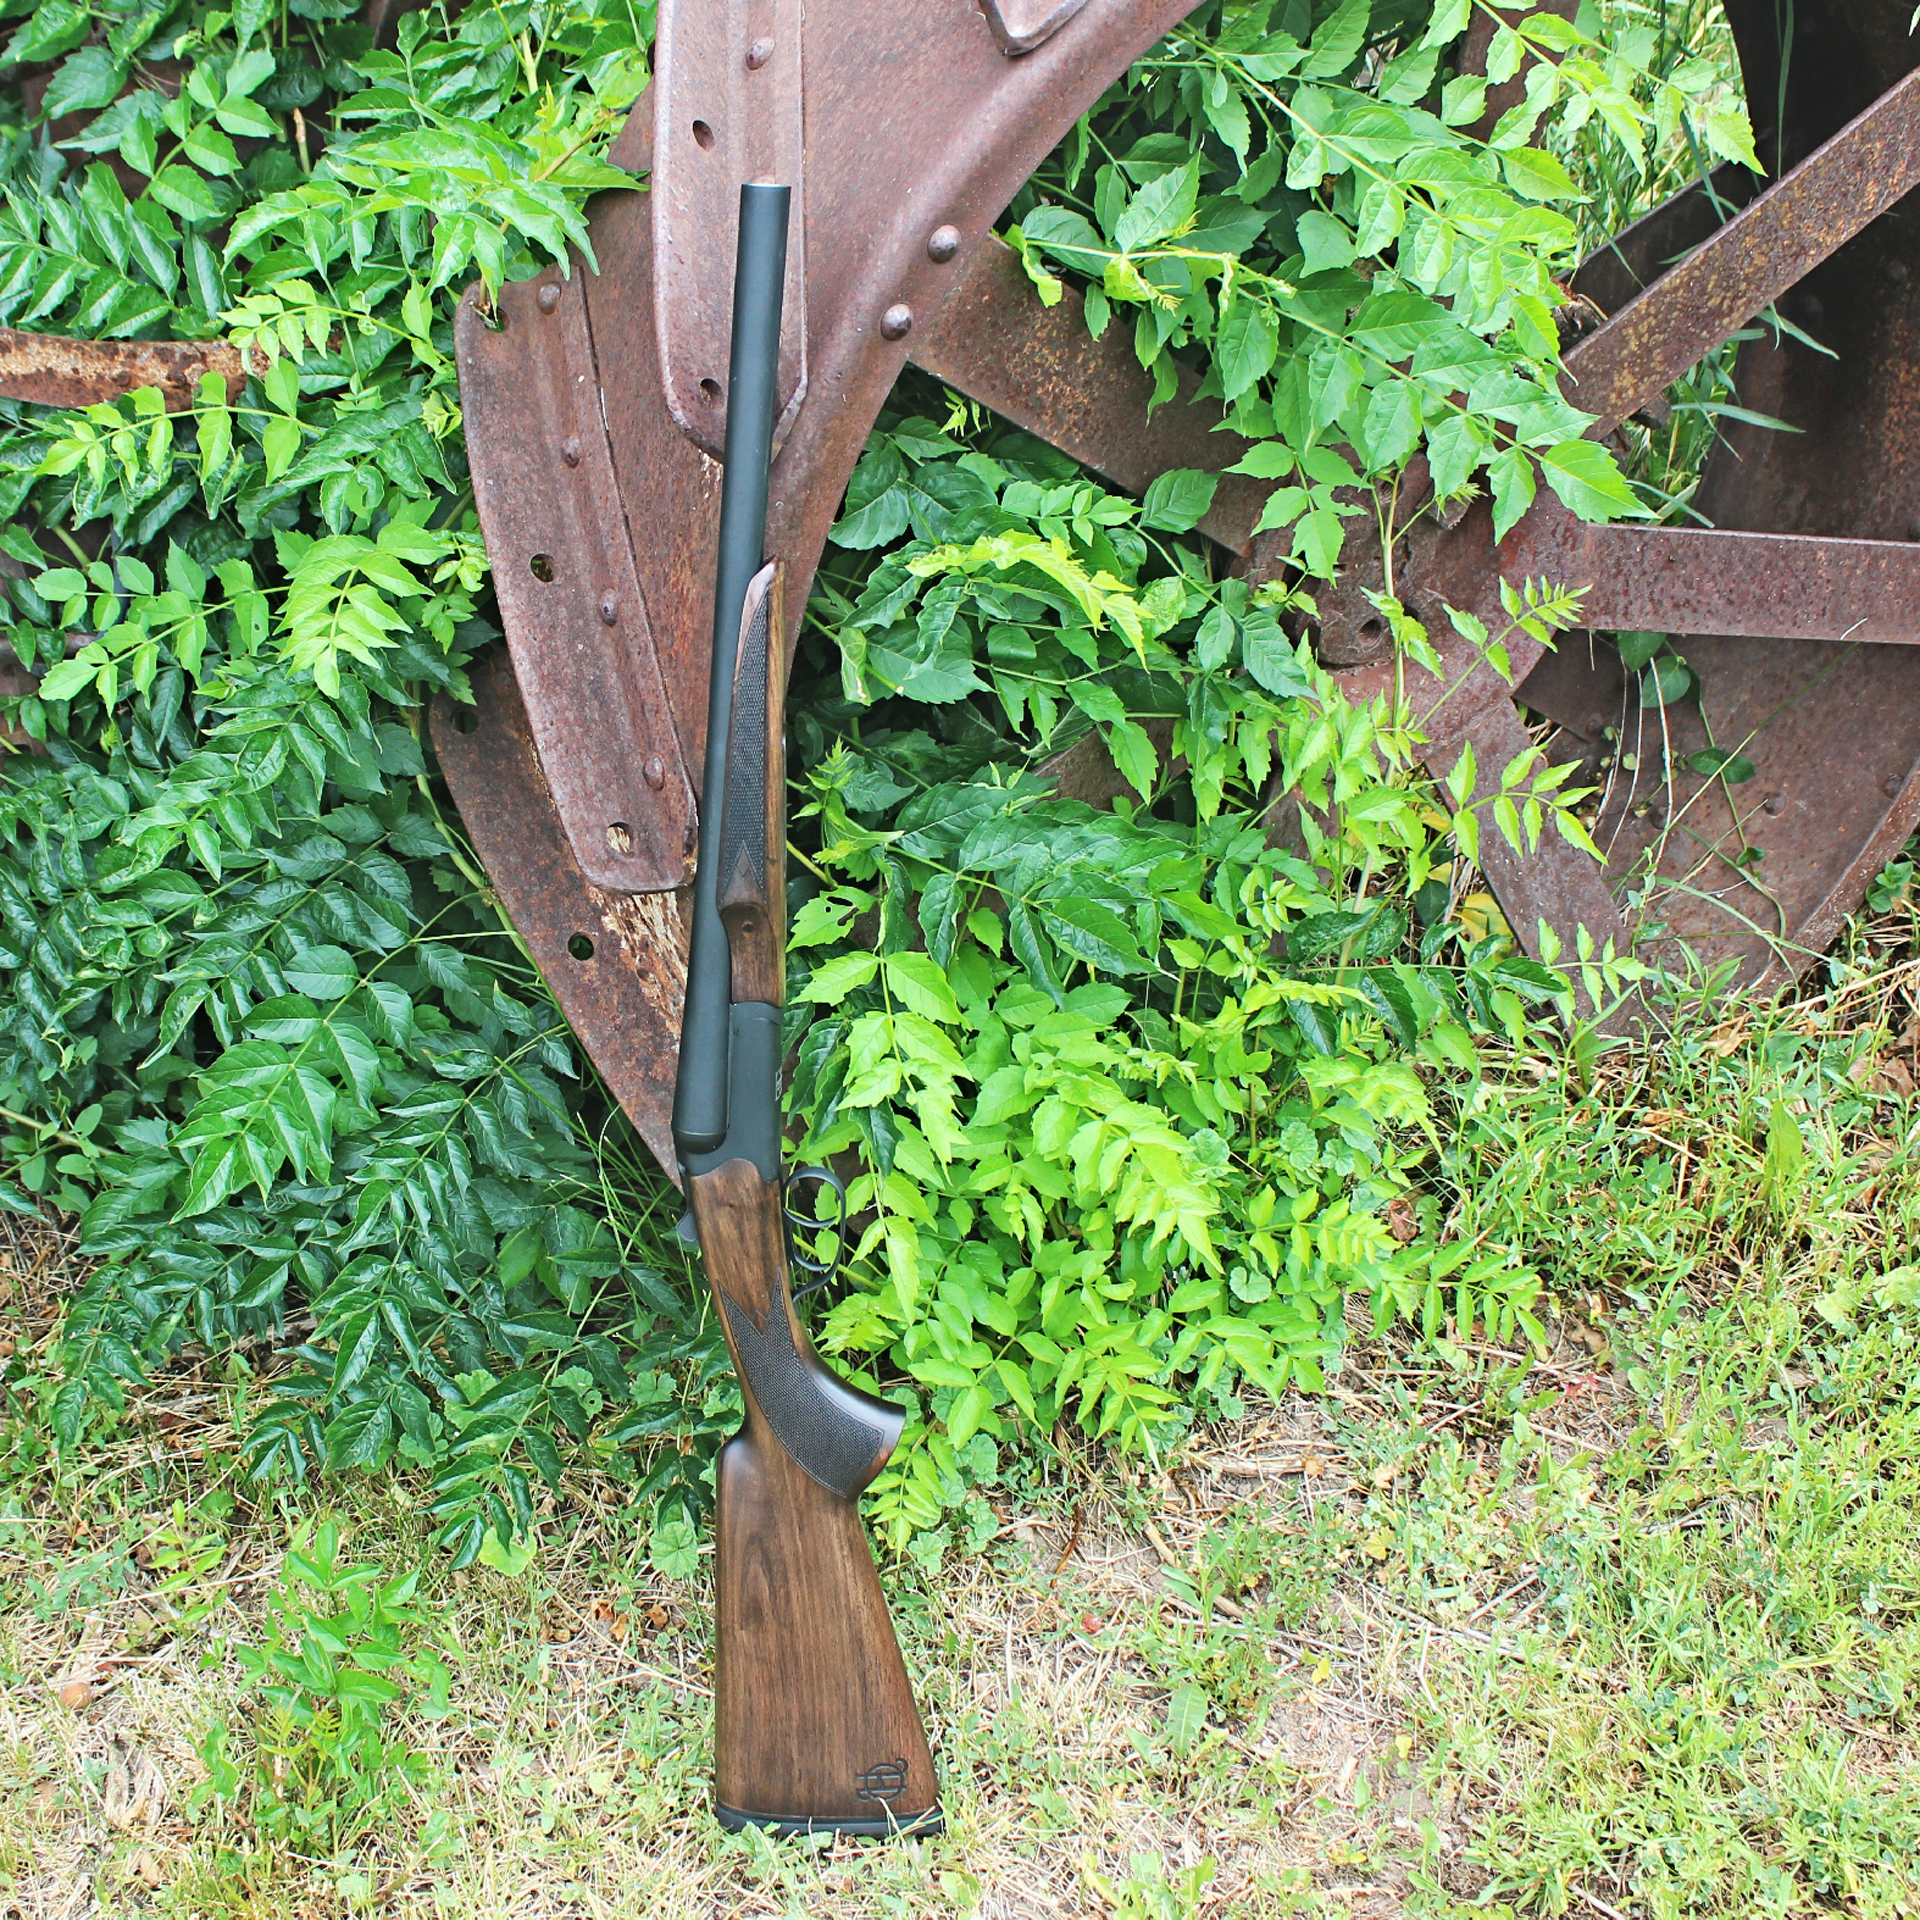 Heritage Badlander shotgun side-by-side coach gun resting on rusty metal wheel outdoors bushes